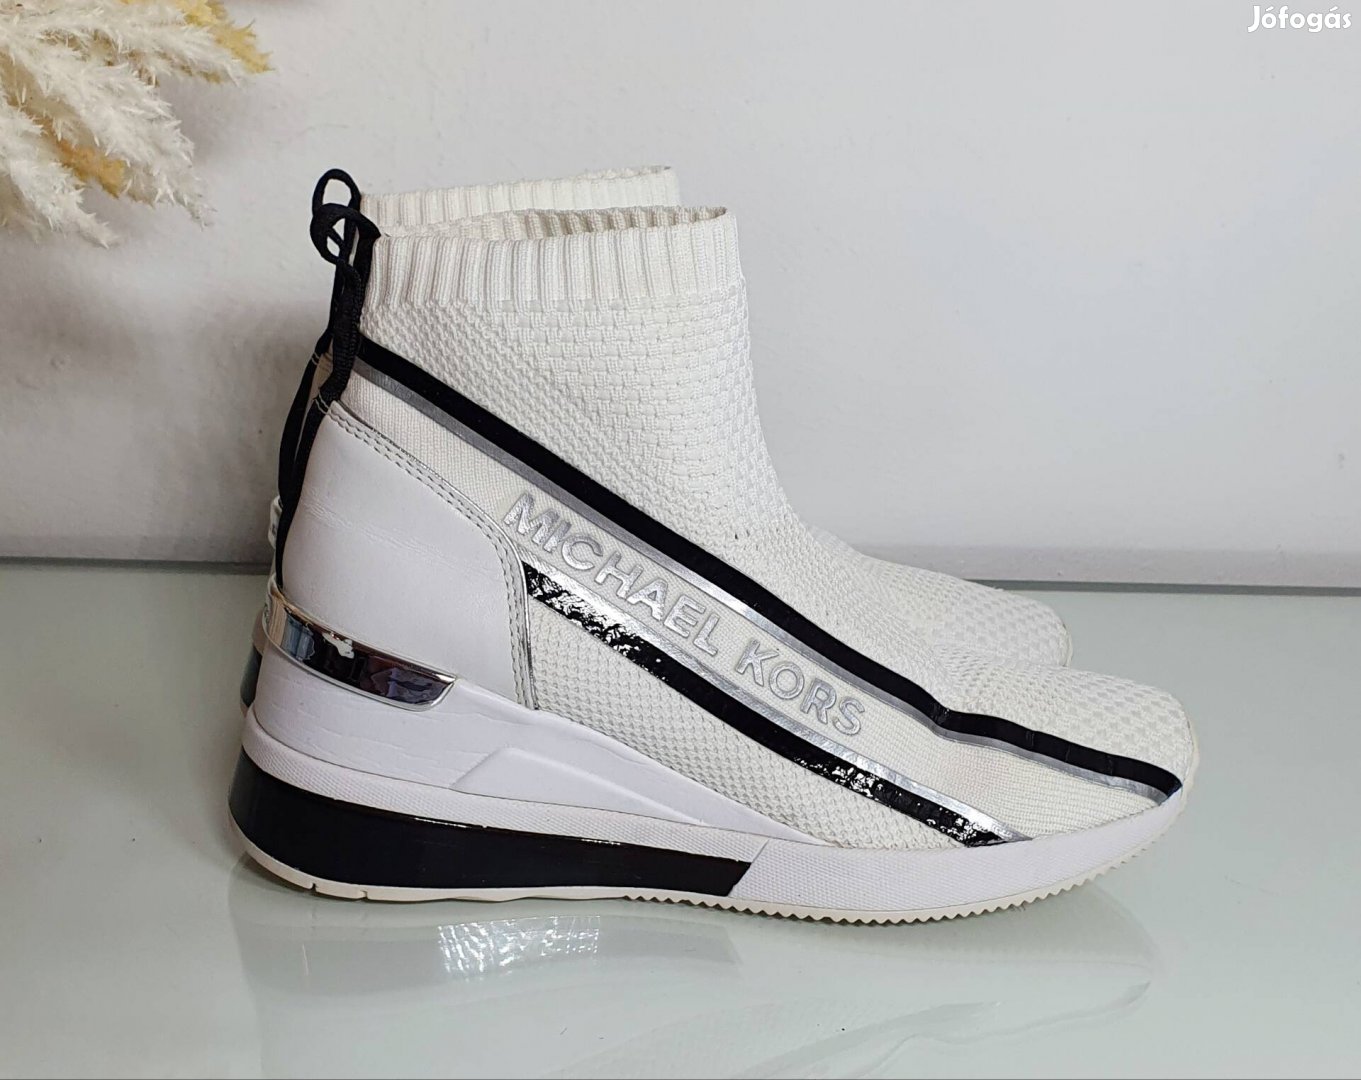 Eredeti Michael Kors zoknicipő, sportcipő 37, fehér